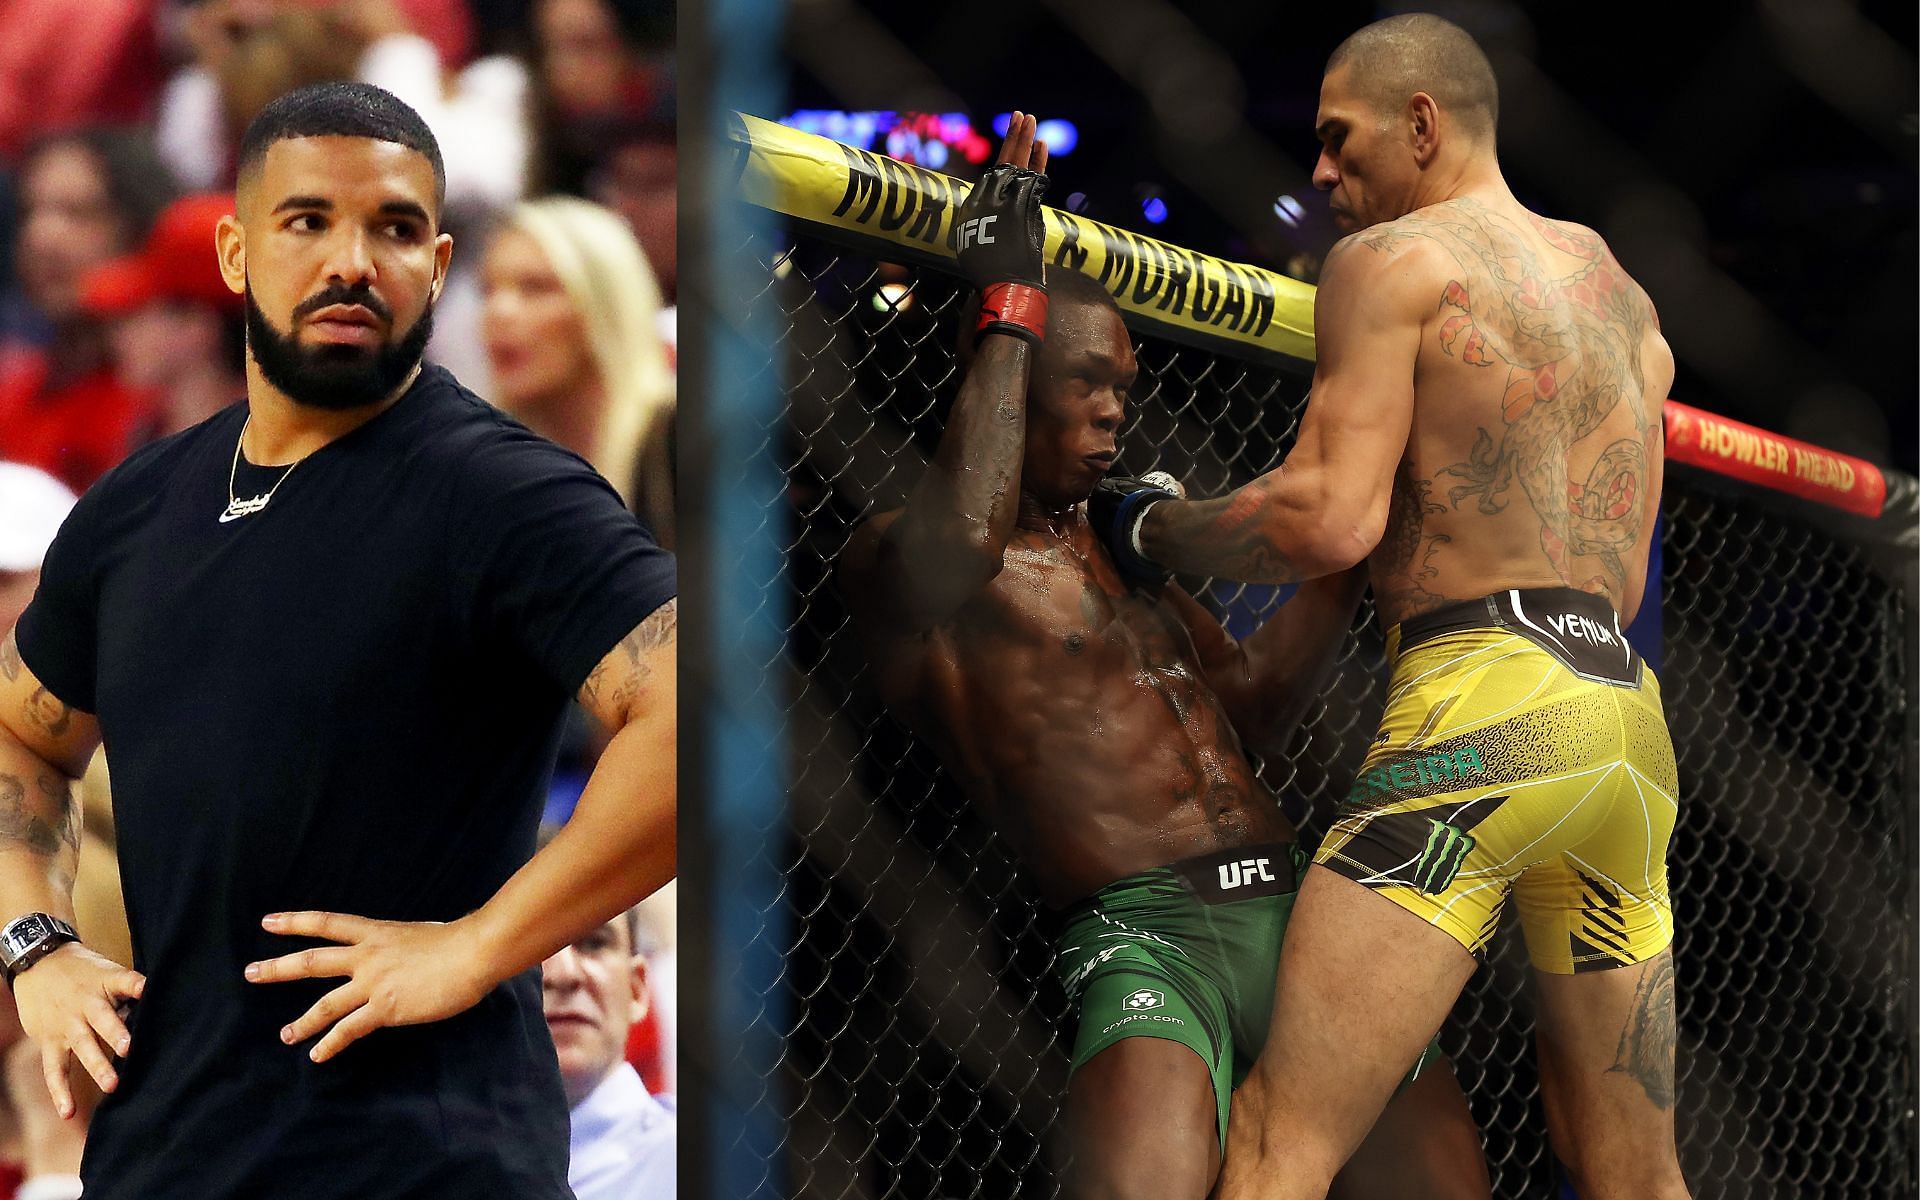 Drake (left) and Alex Pereira punching Israel Adesnya at UFC 281 (right) (Image credits Getty Images)